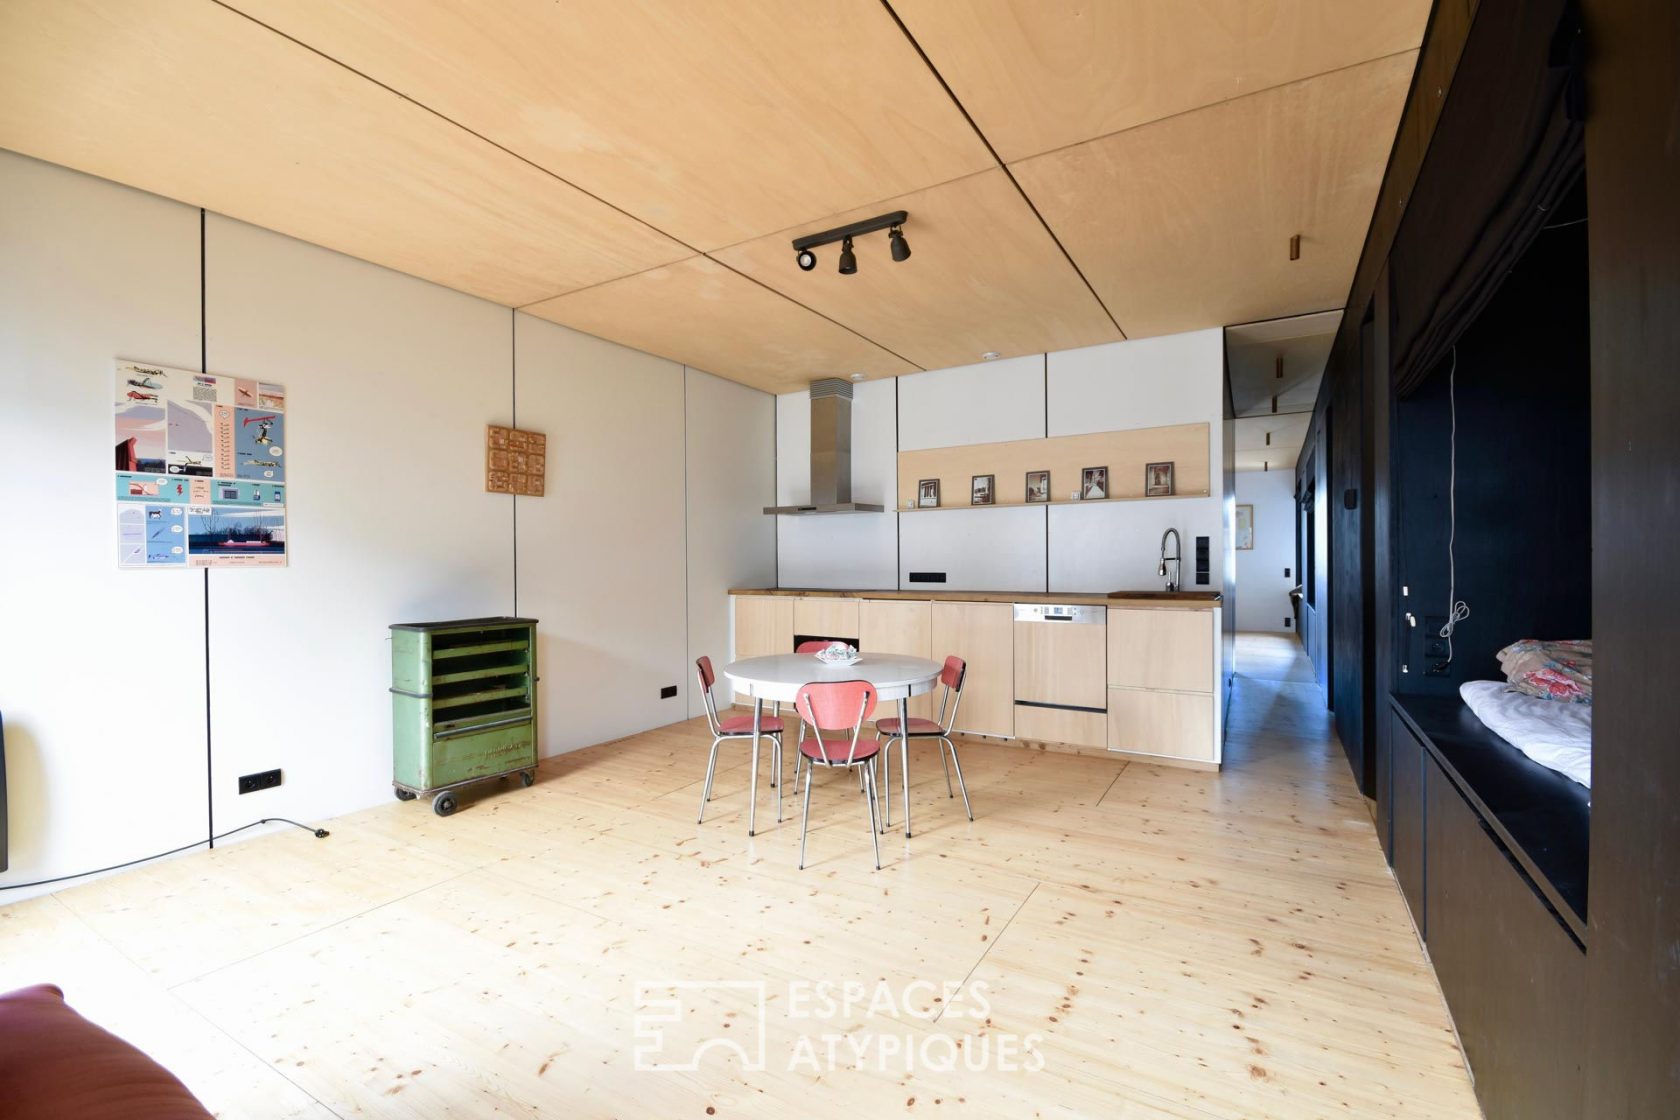 Cocoon apartment designed as a loft spirit